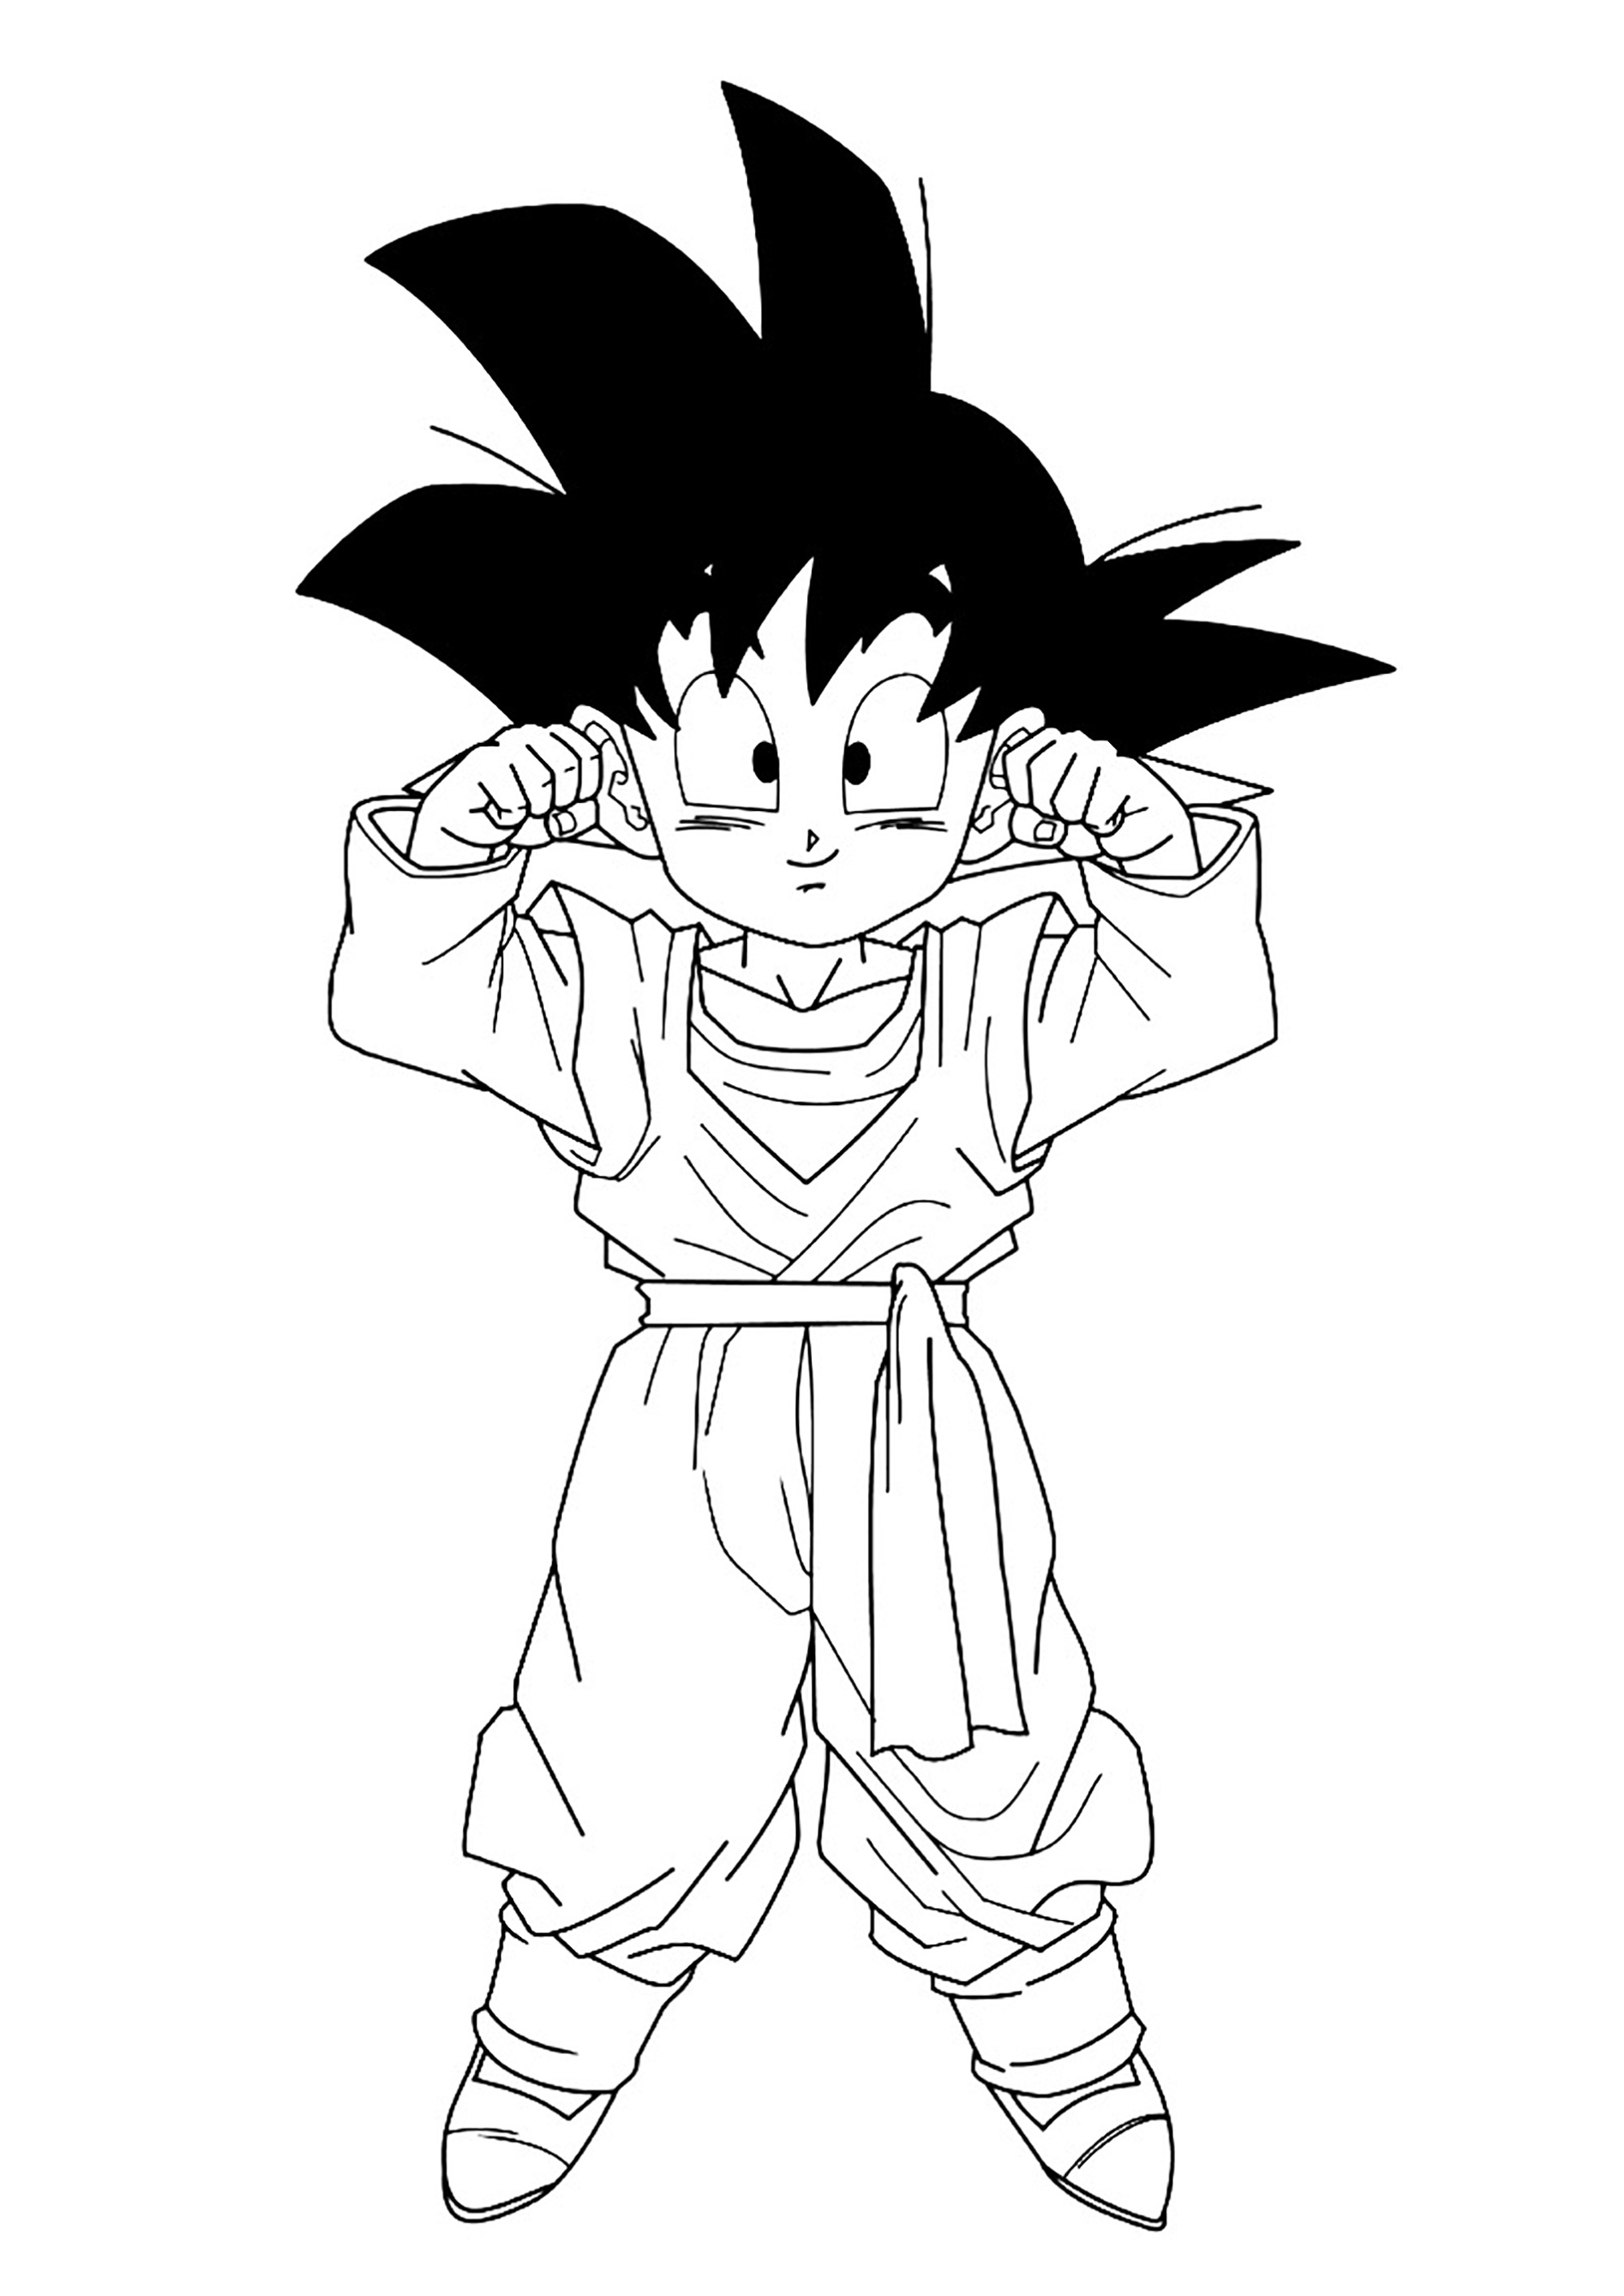 Young Goku (Sangoku)